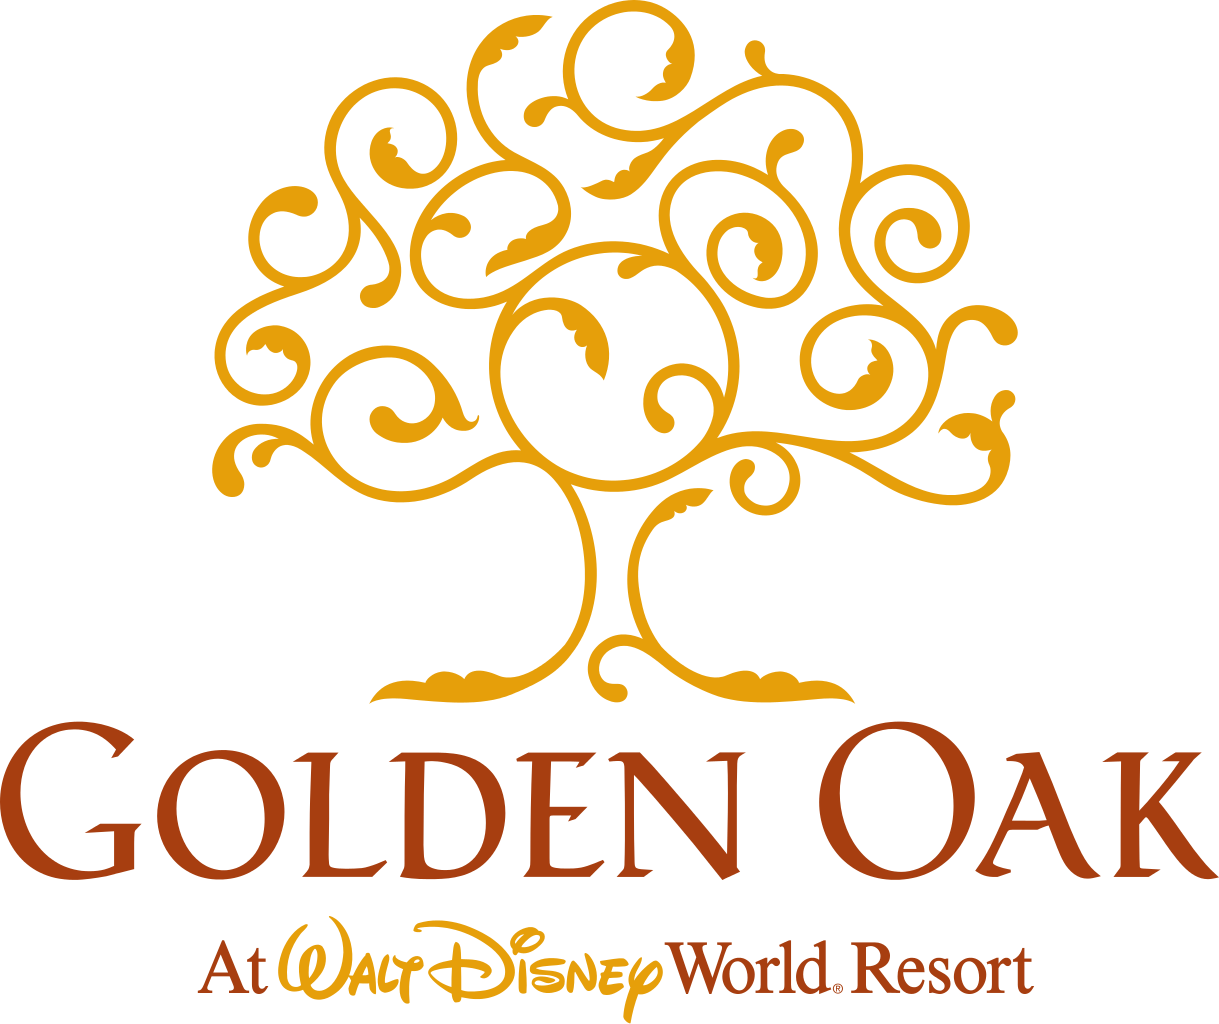 golden oak at walt disney world resort logo png #6155